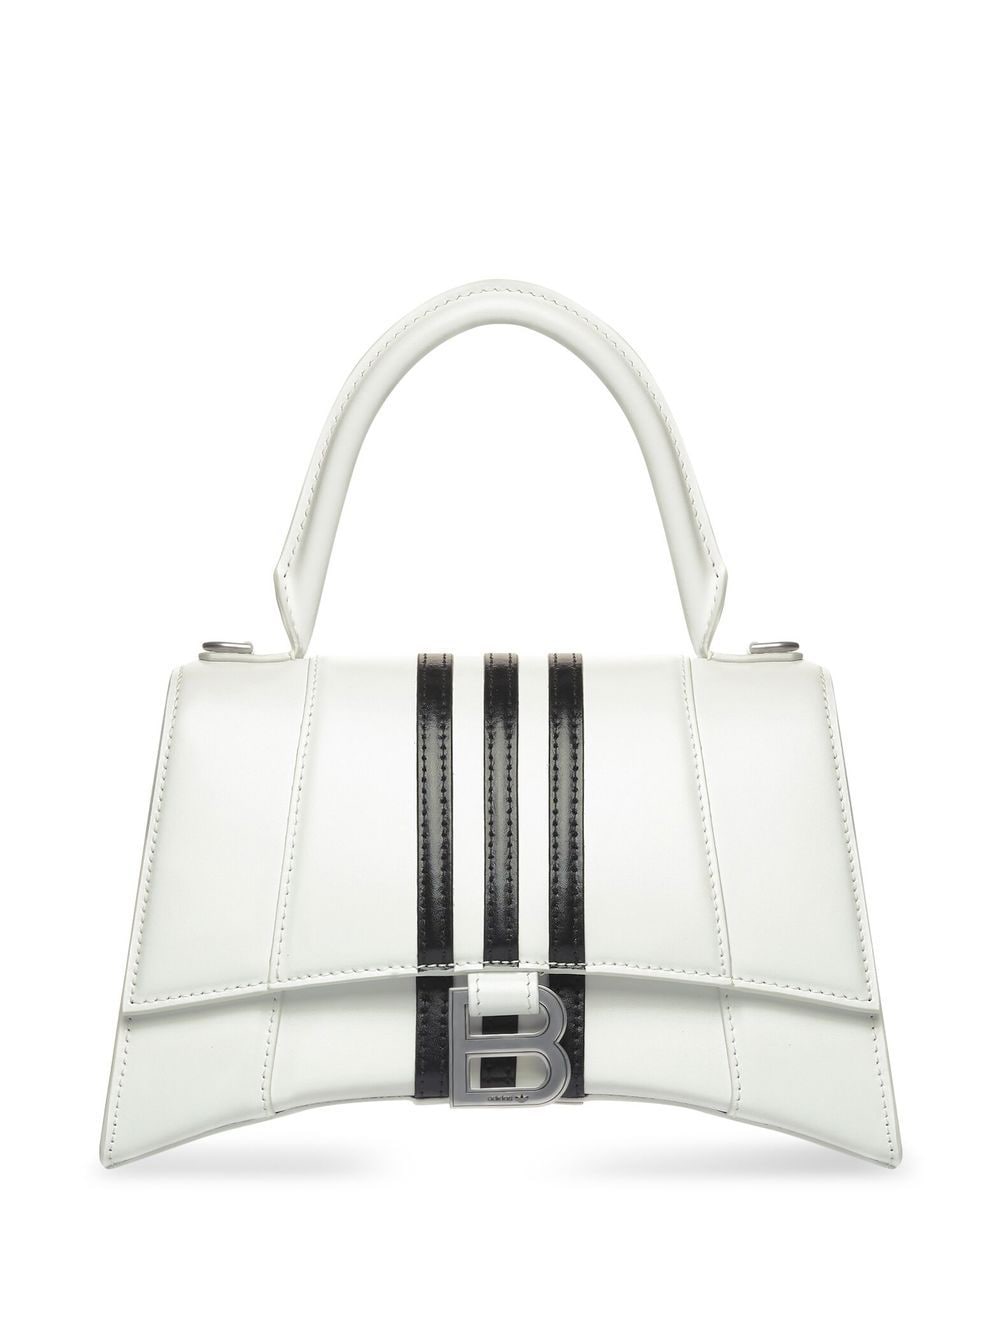 Balenciaga x adidas Hourglass top-handle tote bag - White